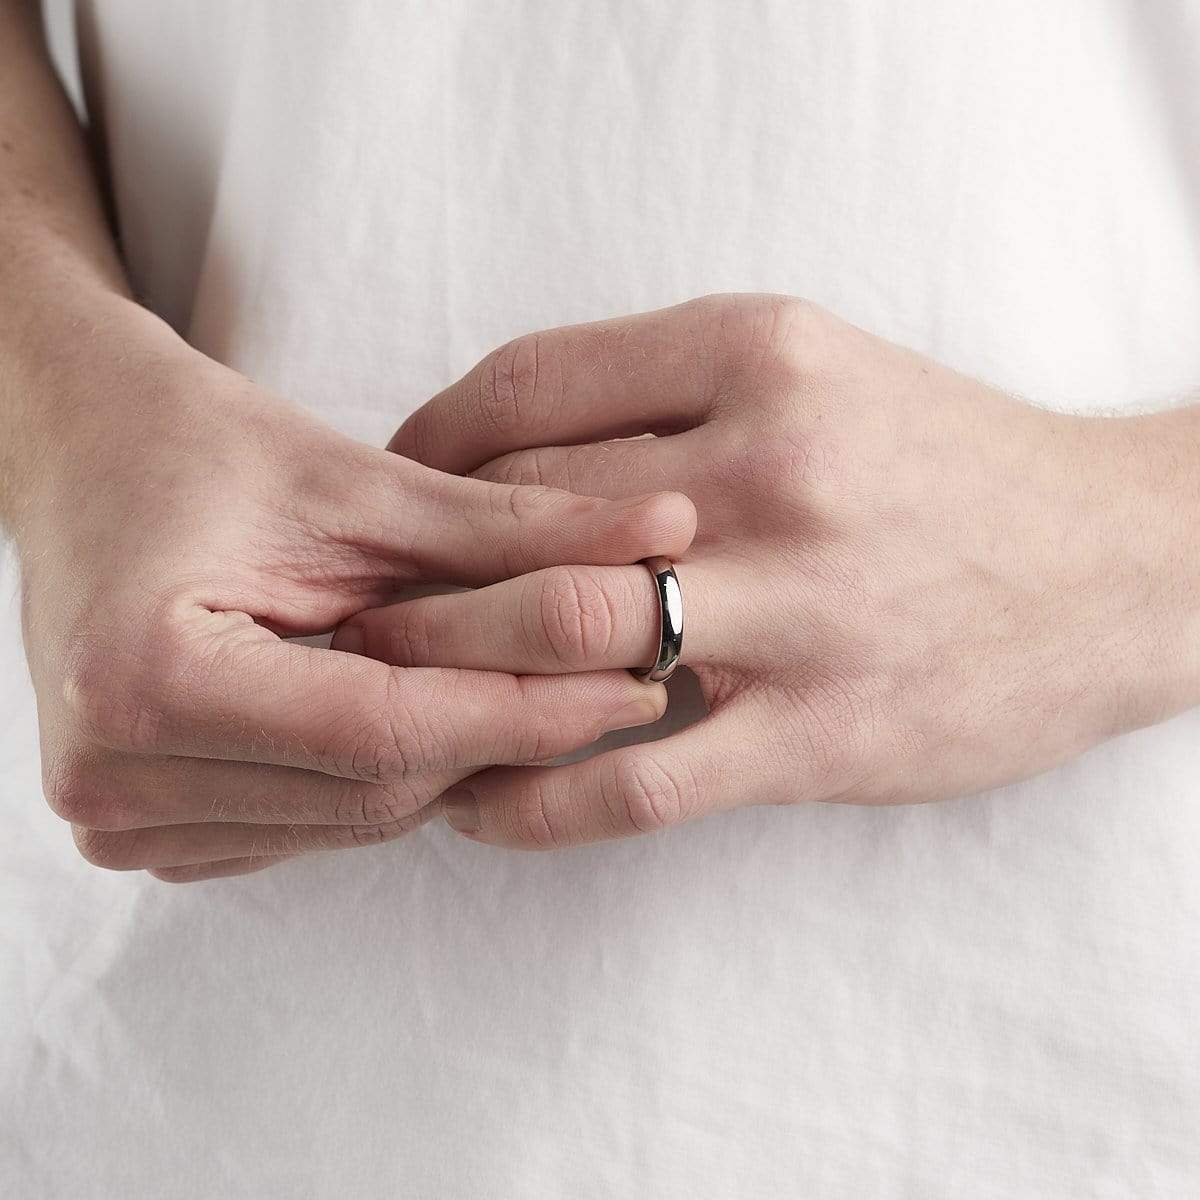 PEORA Classic Men's Genuine Titanium Wedding Band Ring, Black and Silver  Tone, 8mm Beveled Edge Comfort Fit, Size 8 | Amazon.com